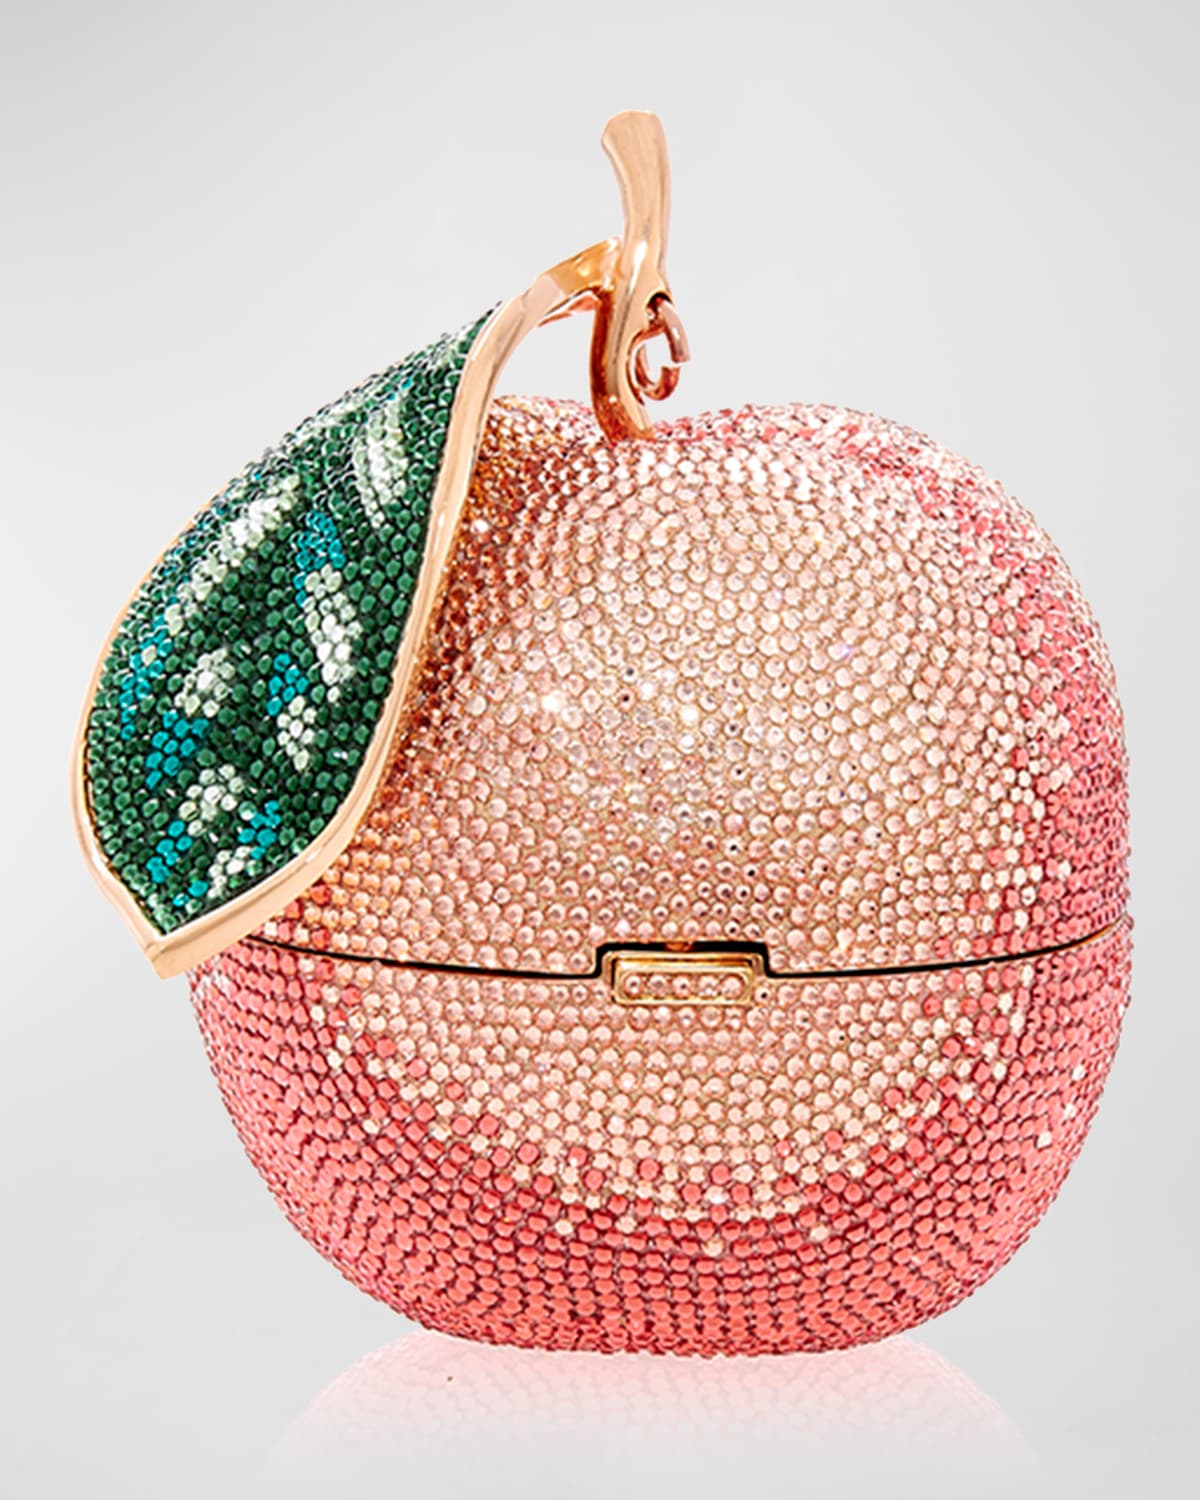 Apple Peach Shimmery Clutch Bag